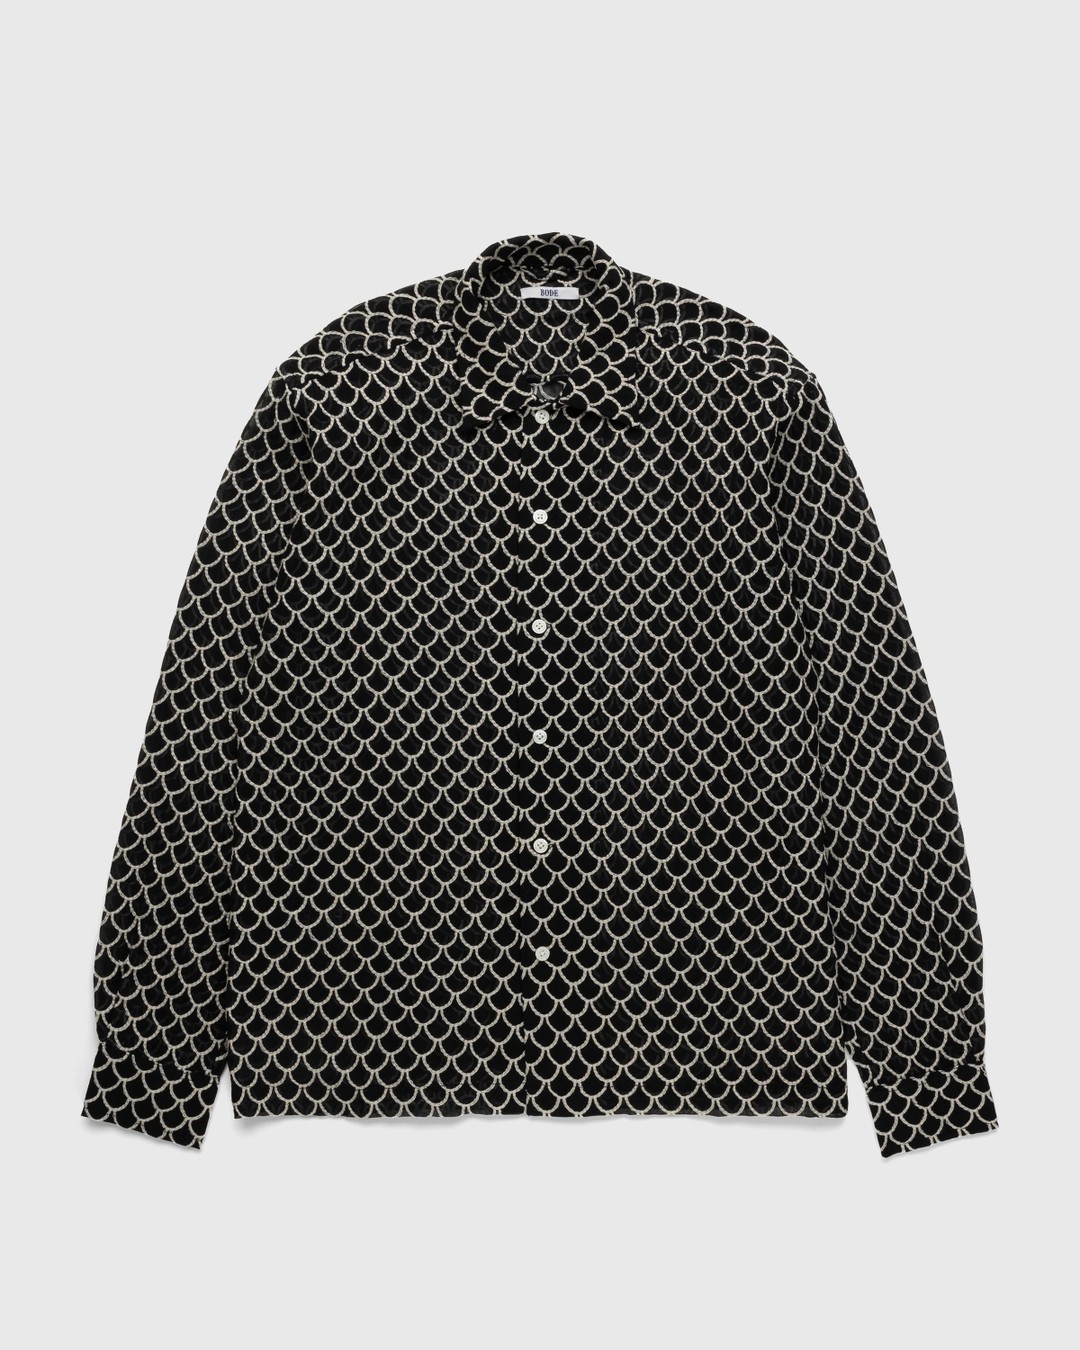 Bode – Embroidered Sheer Siren Long-Sleeve Shirt Black